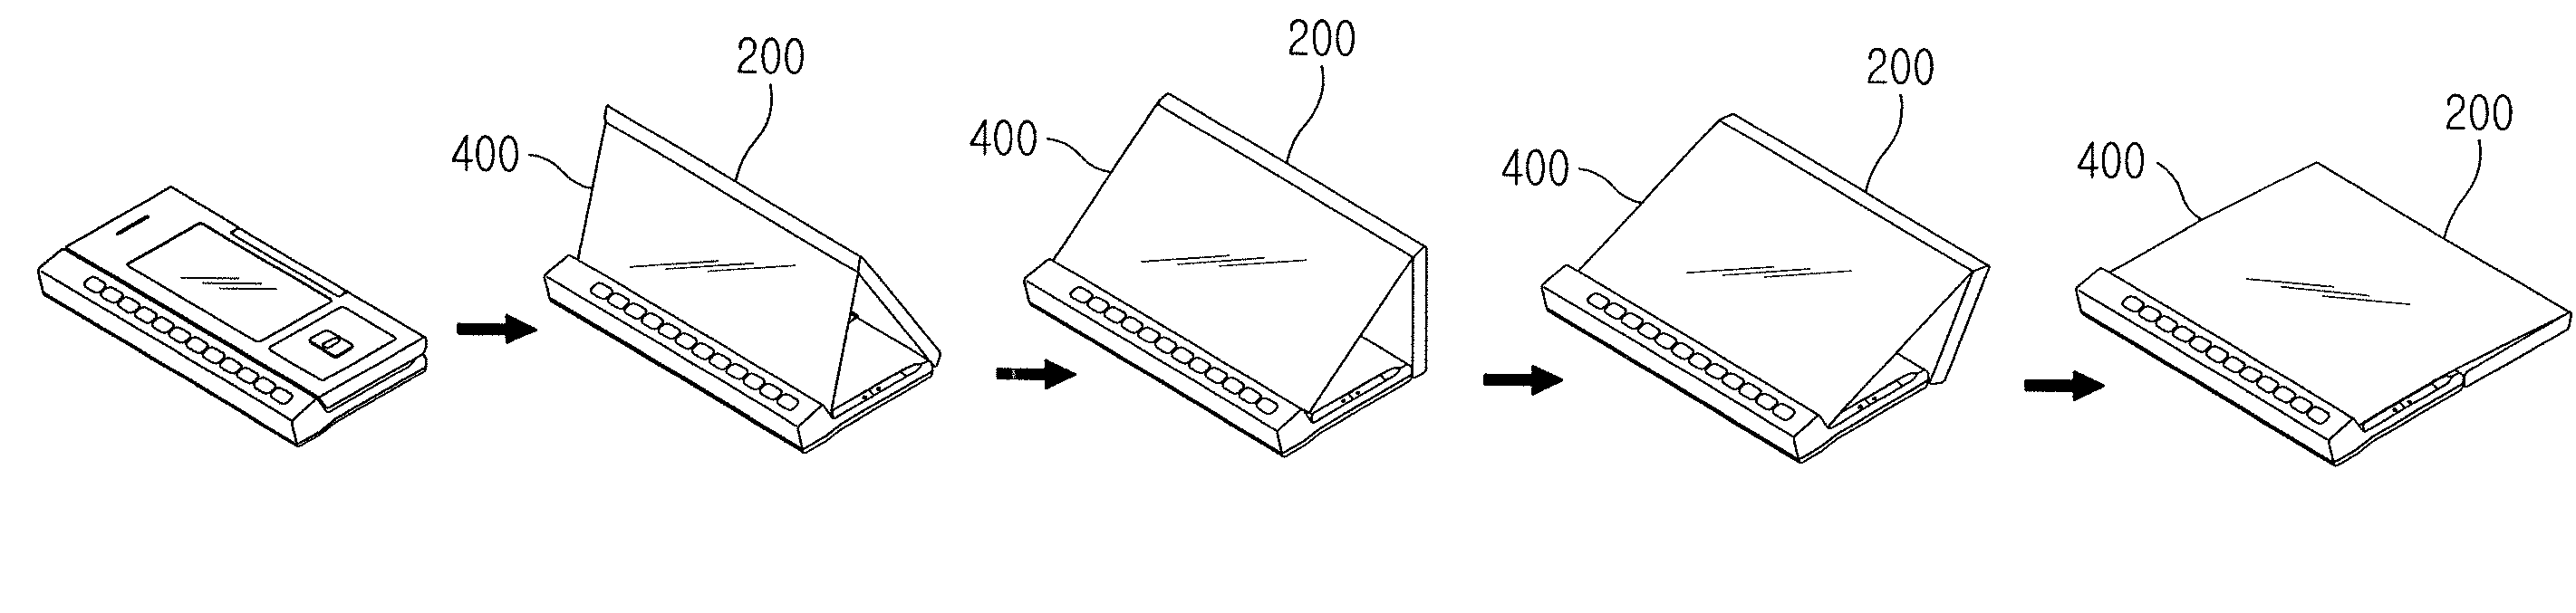 Folder-type portable communication device having flexible display unit